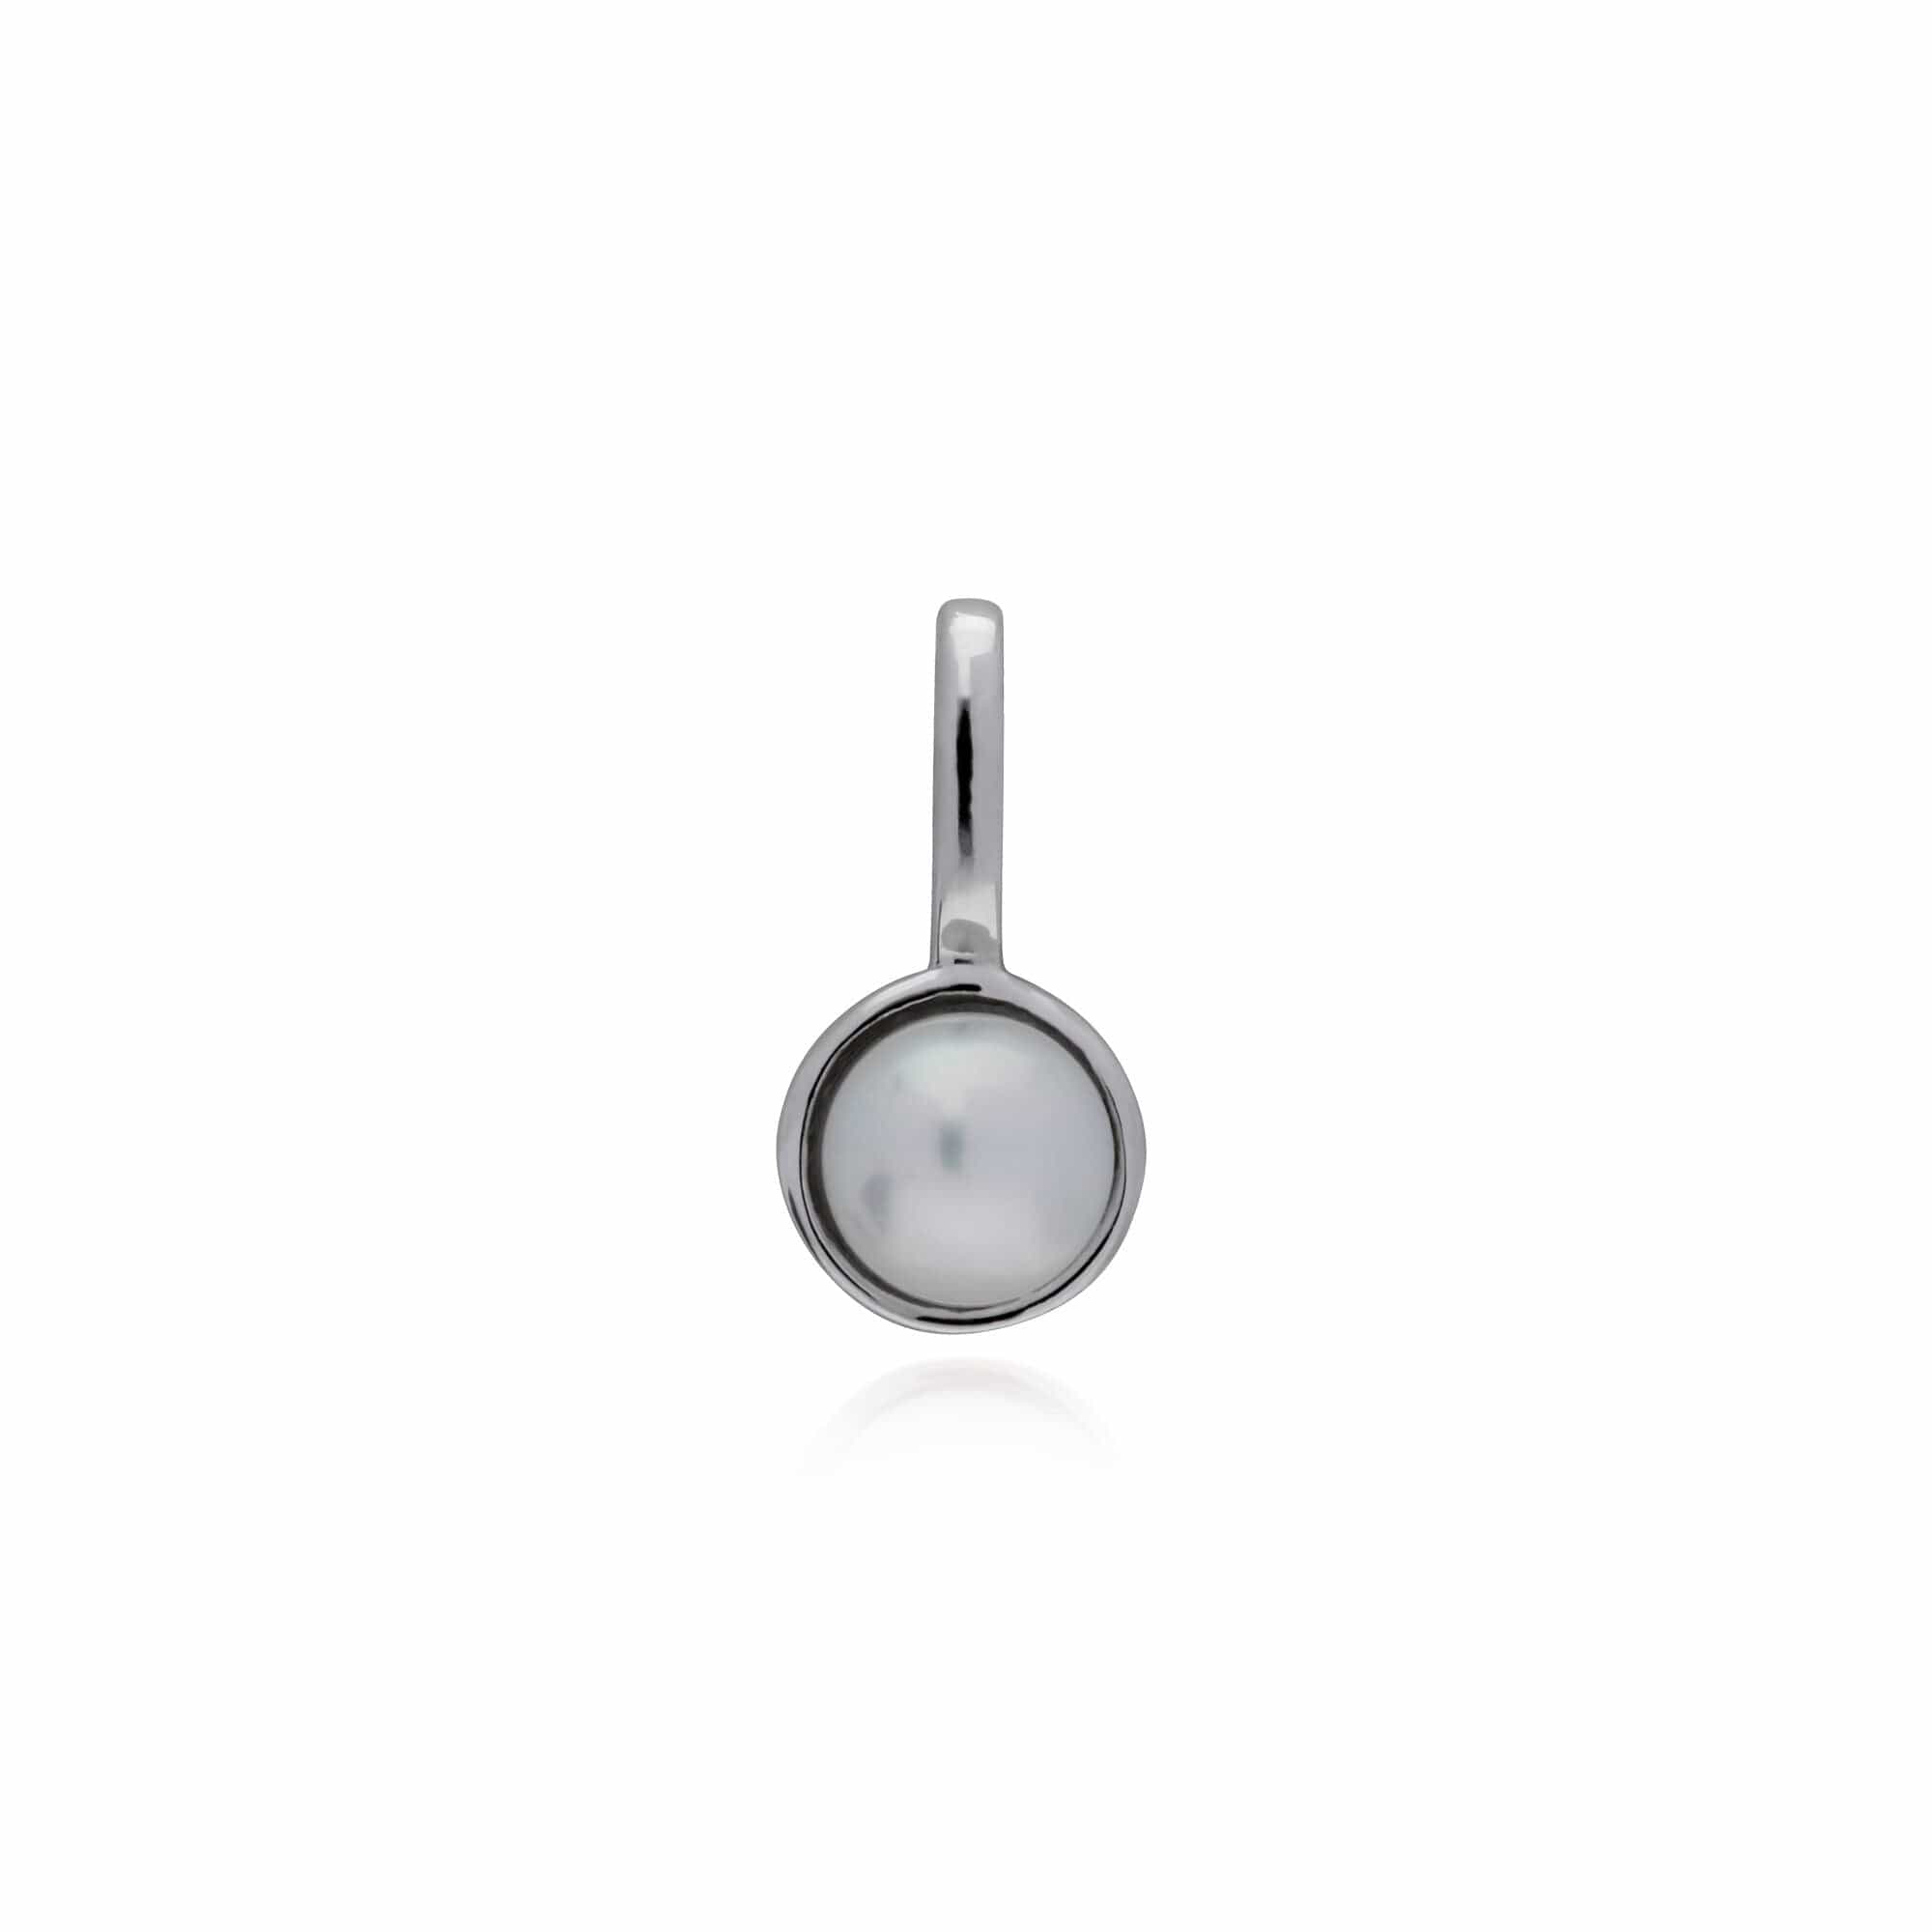 270P025801925-270P026601925 Classic Swirl Heart Lock Pendant & Pearl Charm in 925 Sterling Silver 2